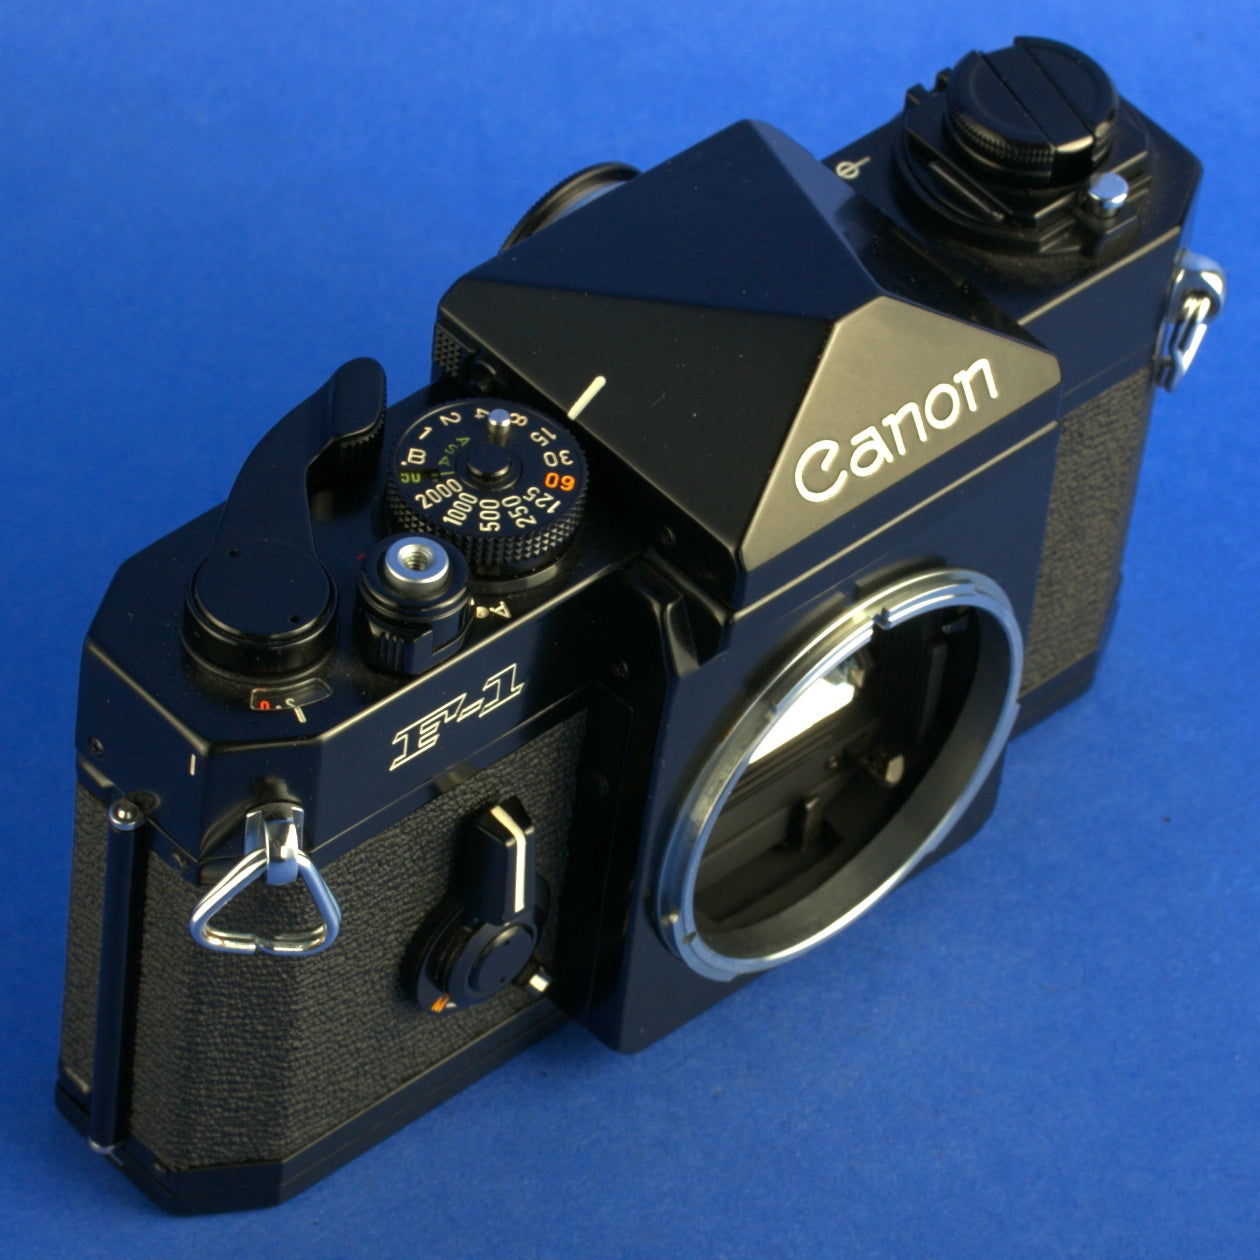 Stunning 1974 Canon F-1 Film Camera Body Near Mint Condition